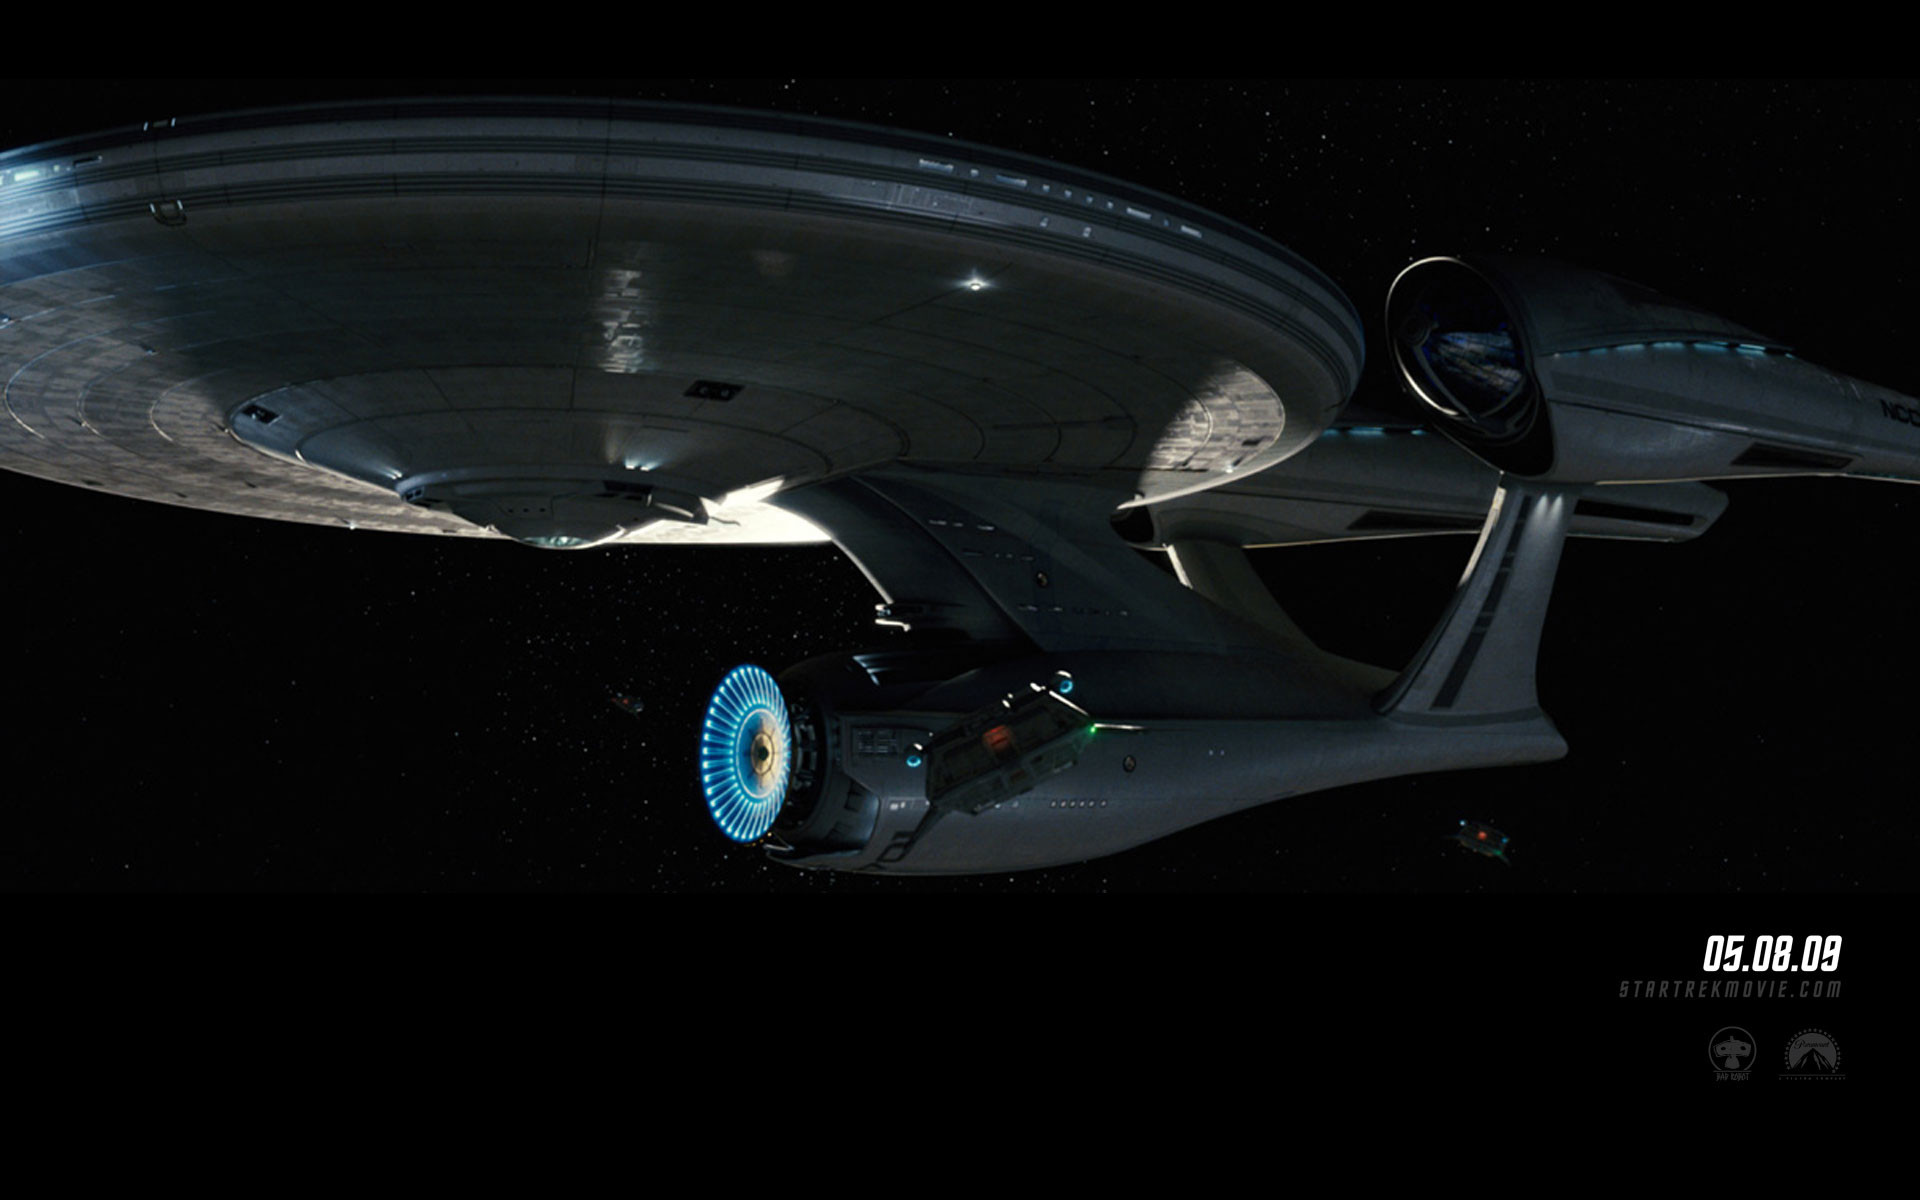 Star Trek desktop wallpaper number 10 – the 2009 movie version of the USS